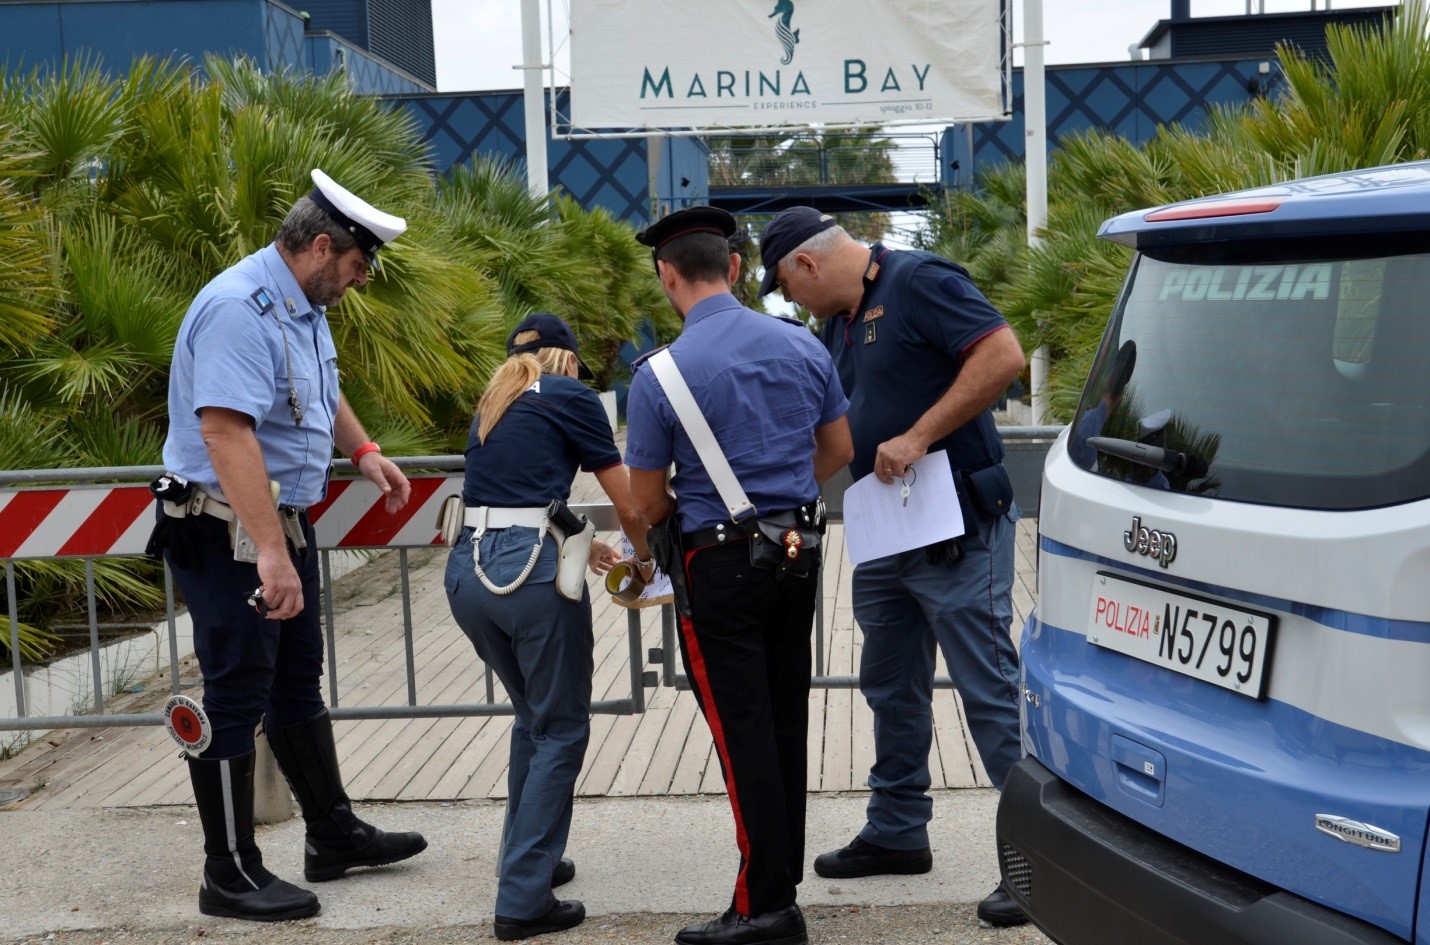 Polizia:sospesa la licenza del “Marina Bay” di Marina di Ravenna